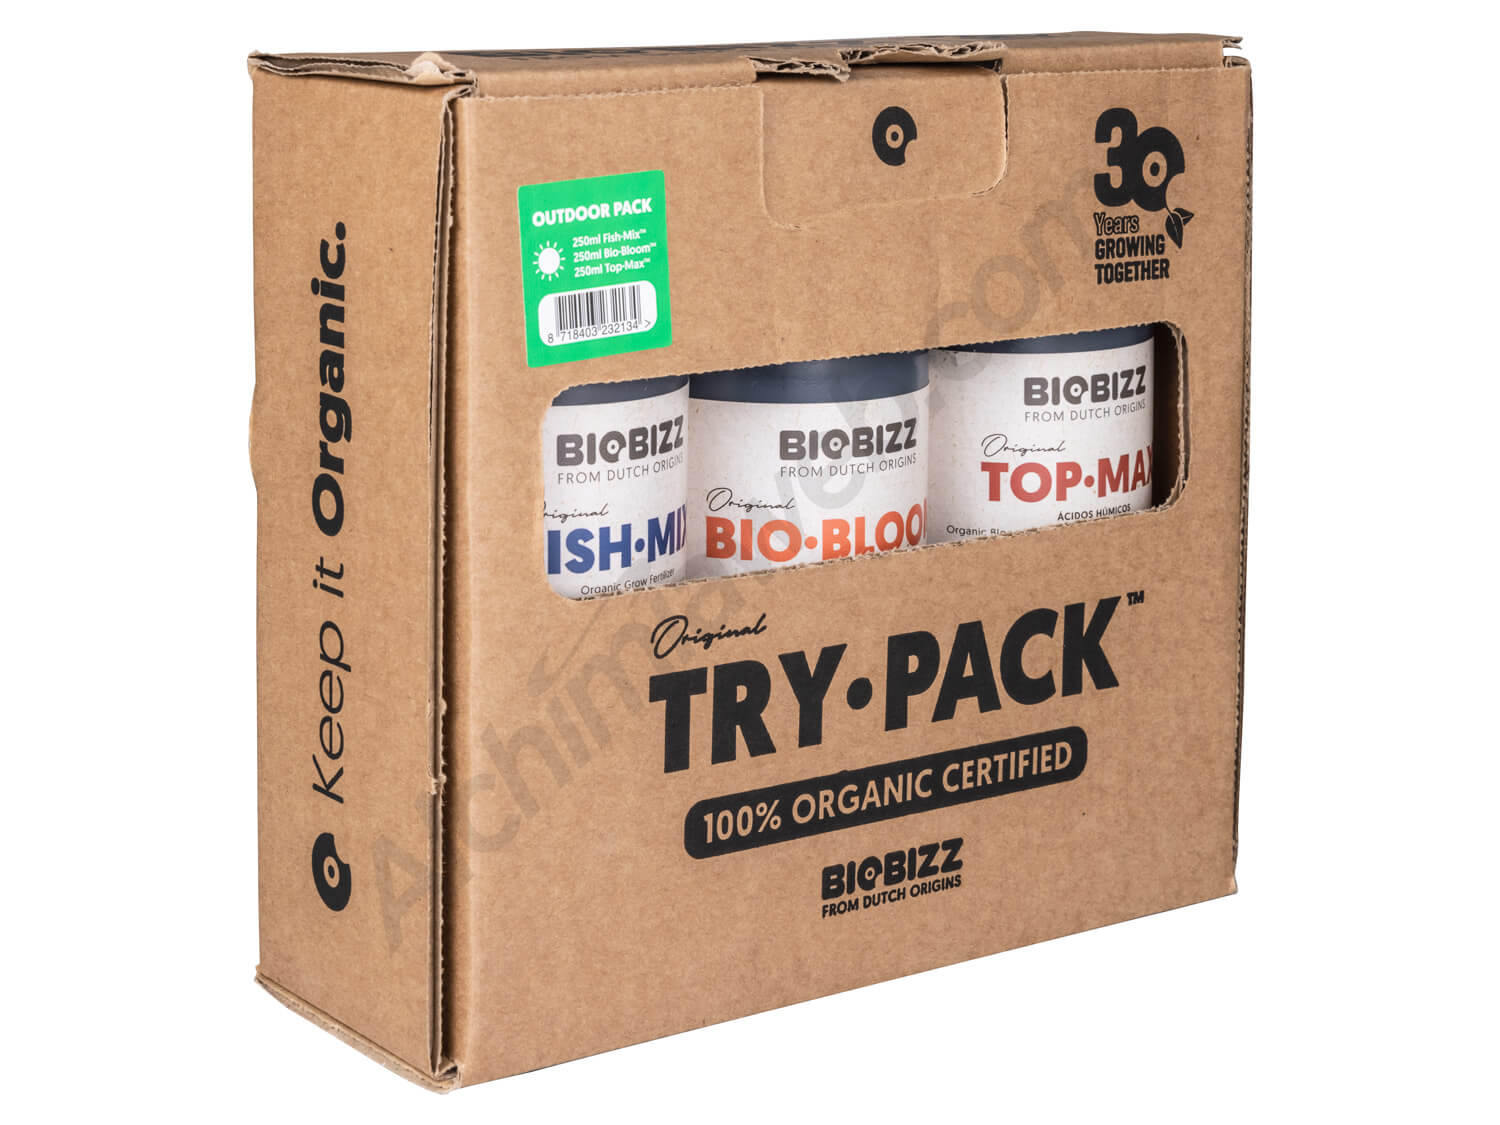 Biobizz Try-pack Outdoor